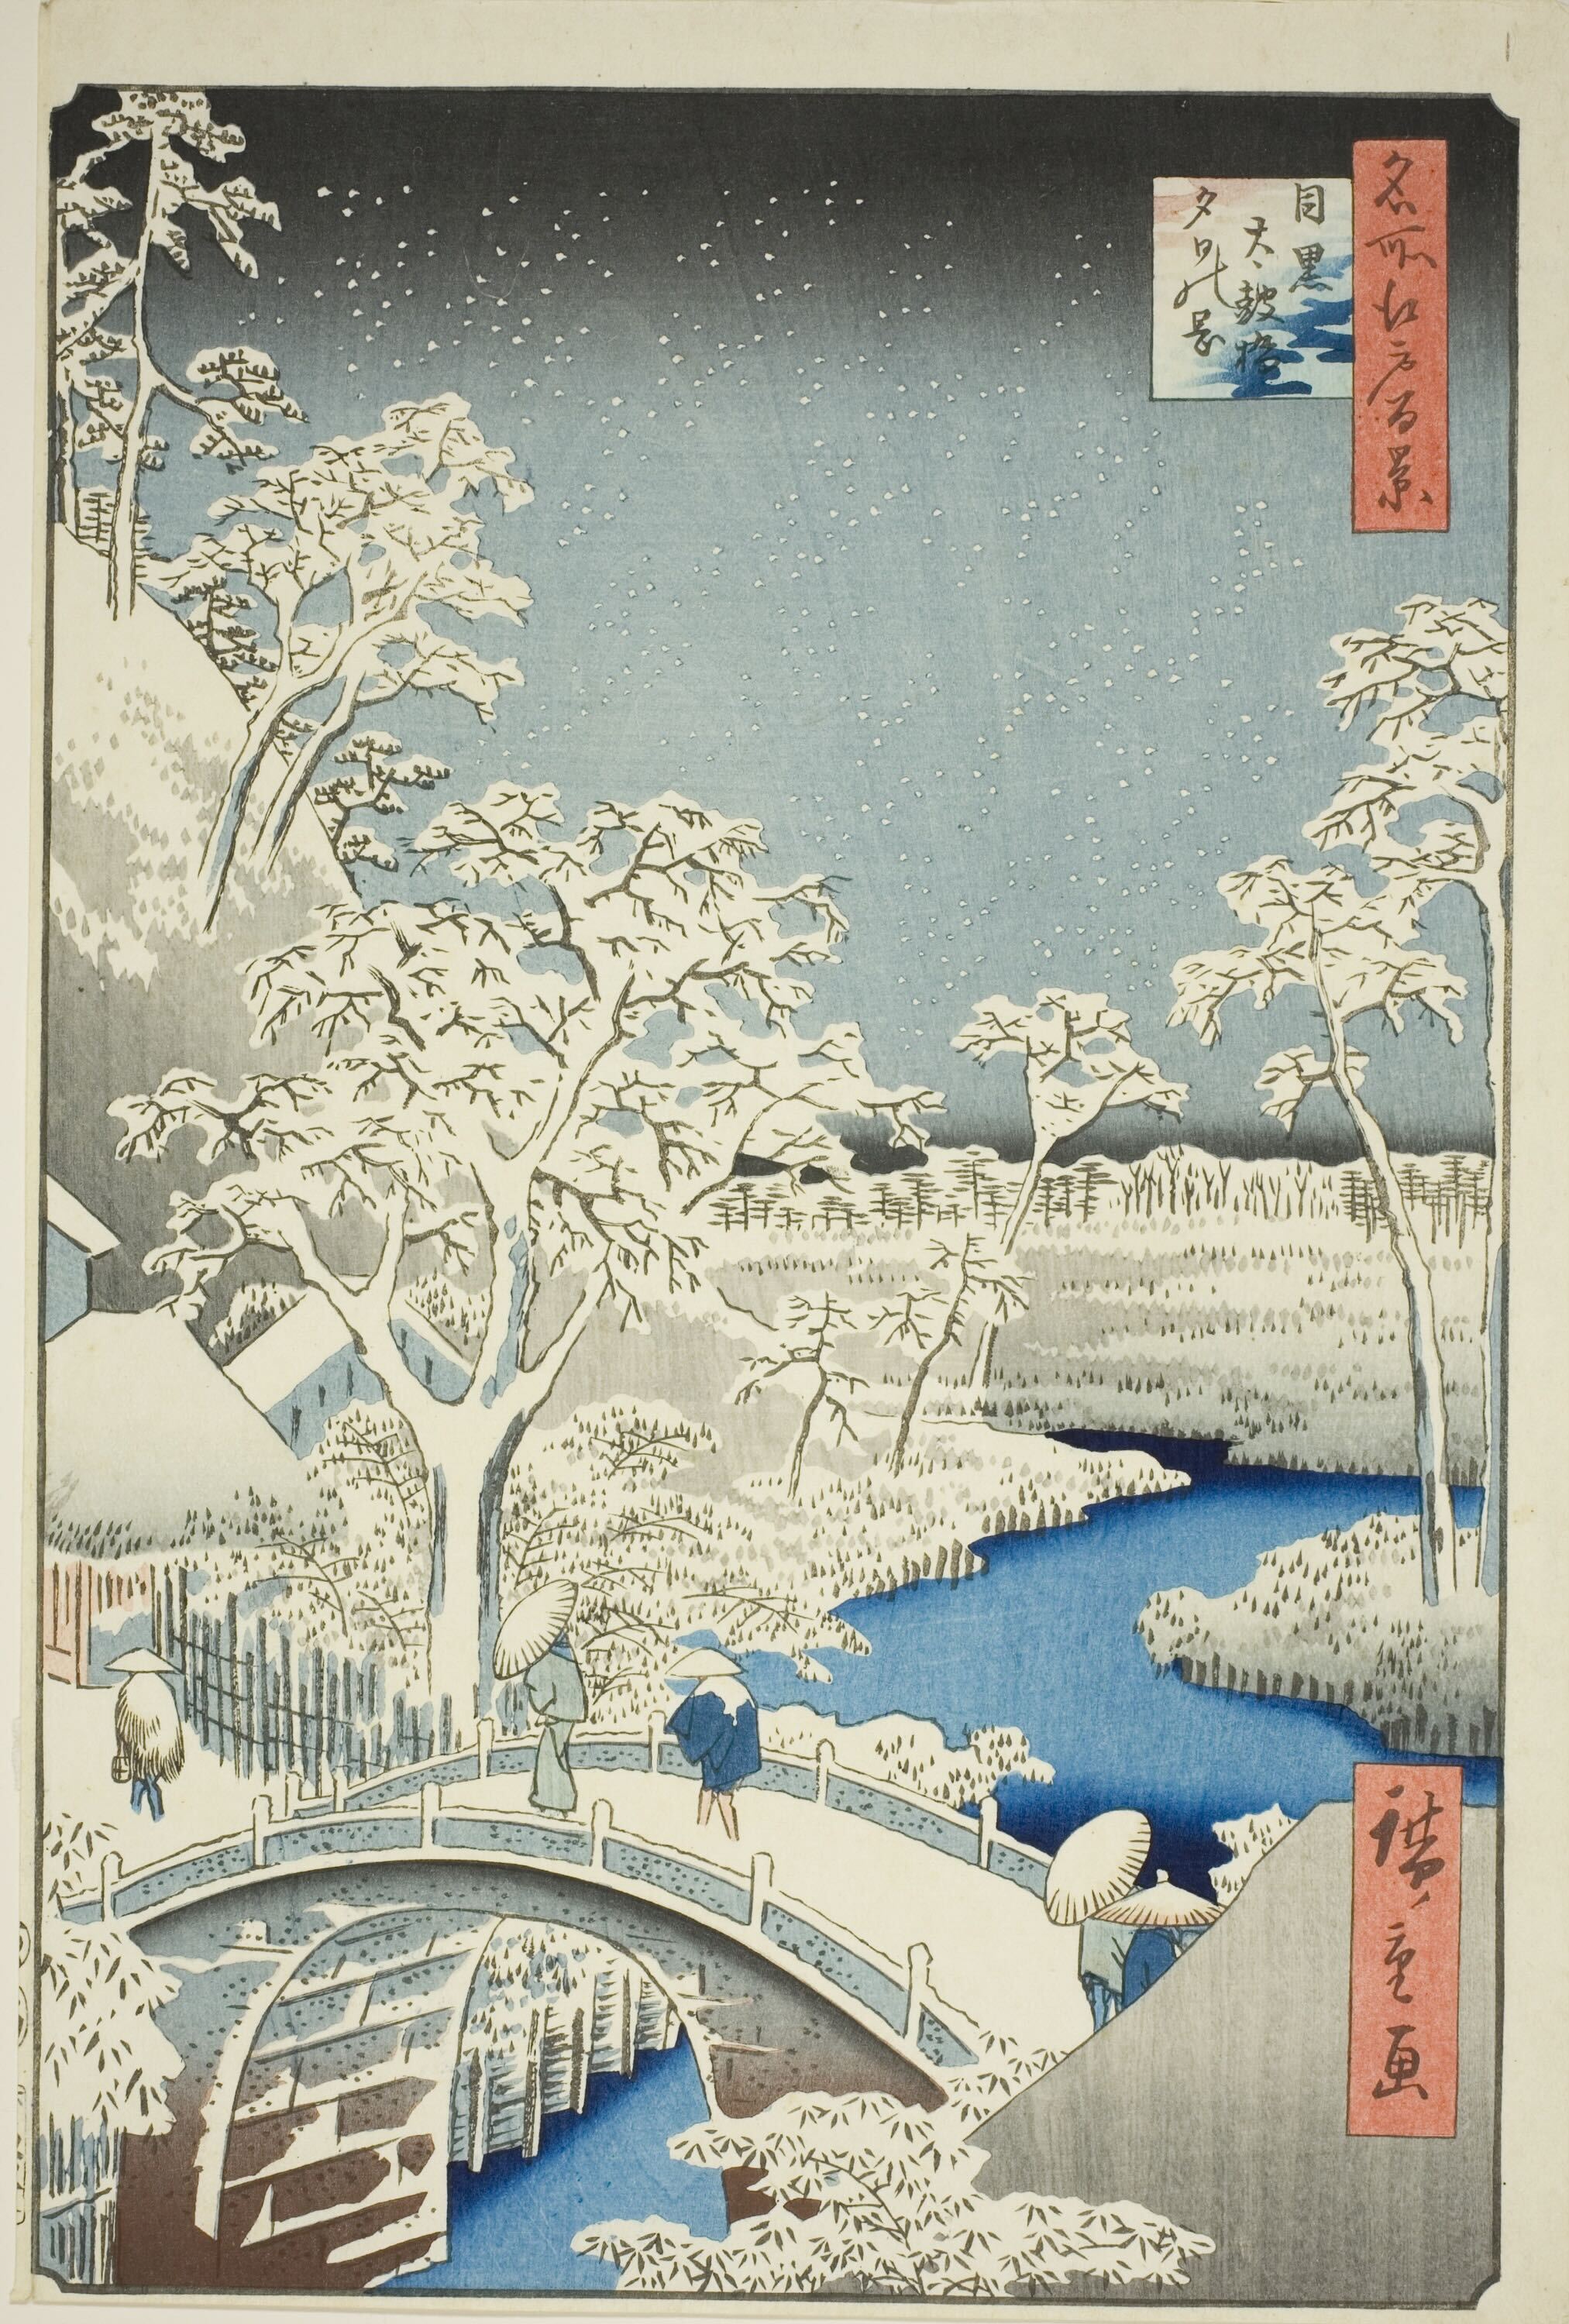 Taiko Bridge, Meguro, on a Snowy Evening by  Hiroshige - 1857 - 36.2 x 23.5 cm Art Institute of Chicago